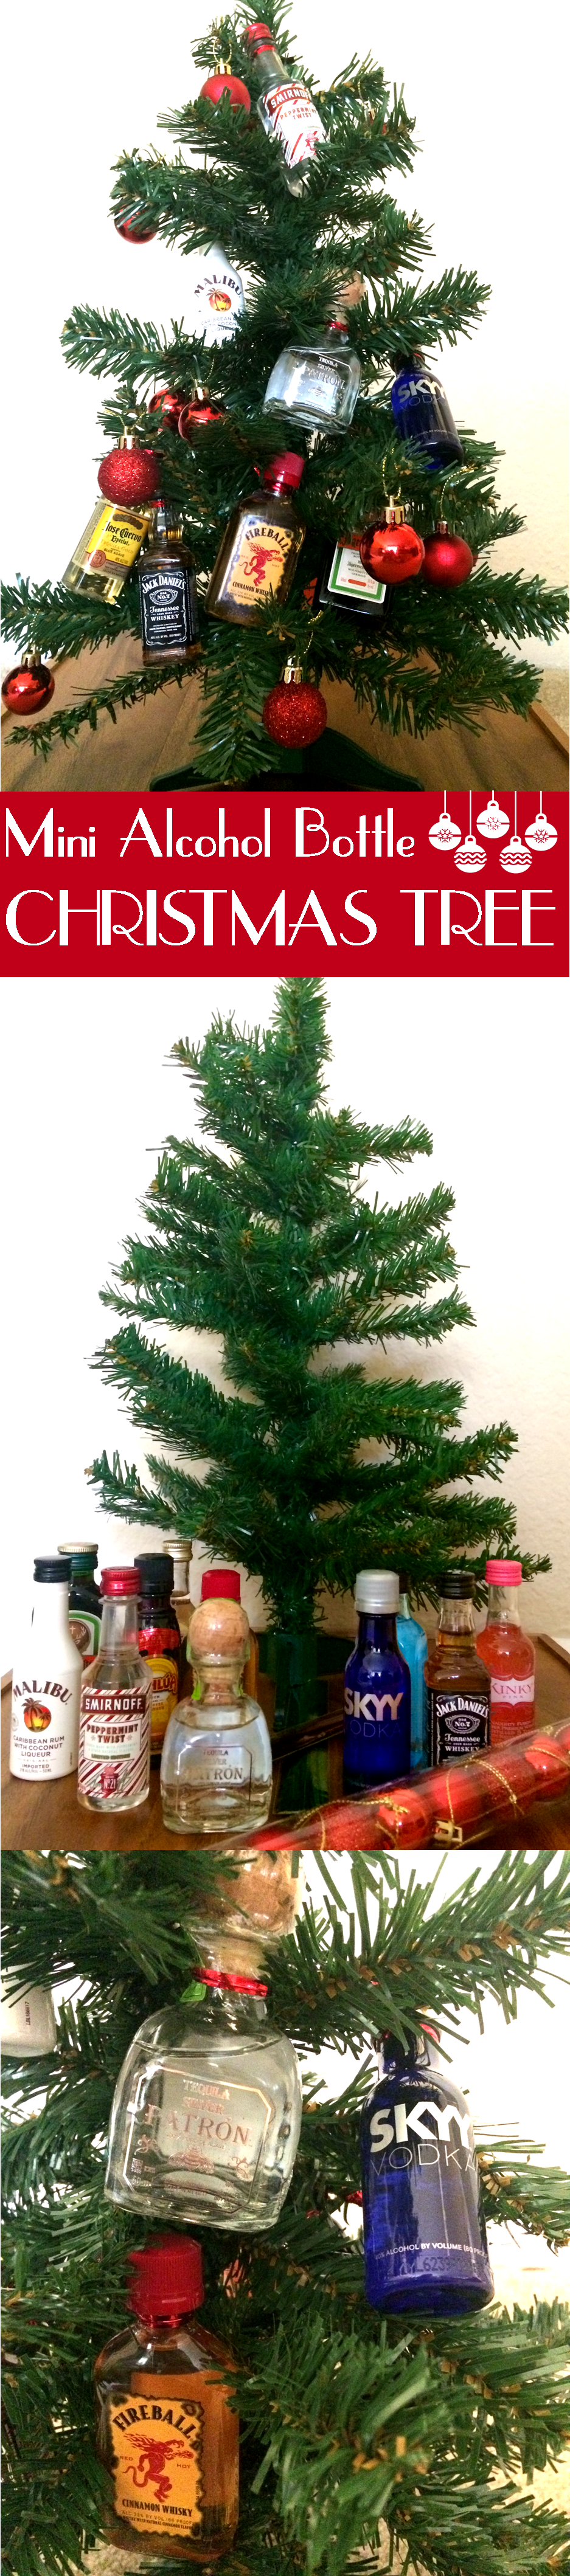 Jack Daniel's - Old No. 7 Miniature Christmas Tree Decoration Whiskey